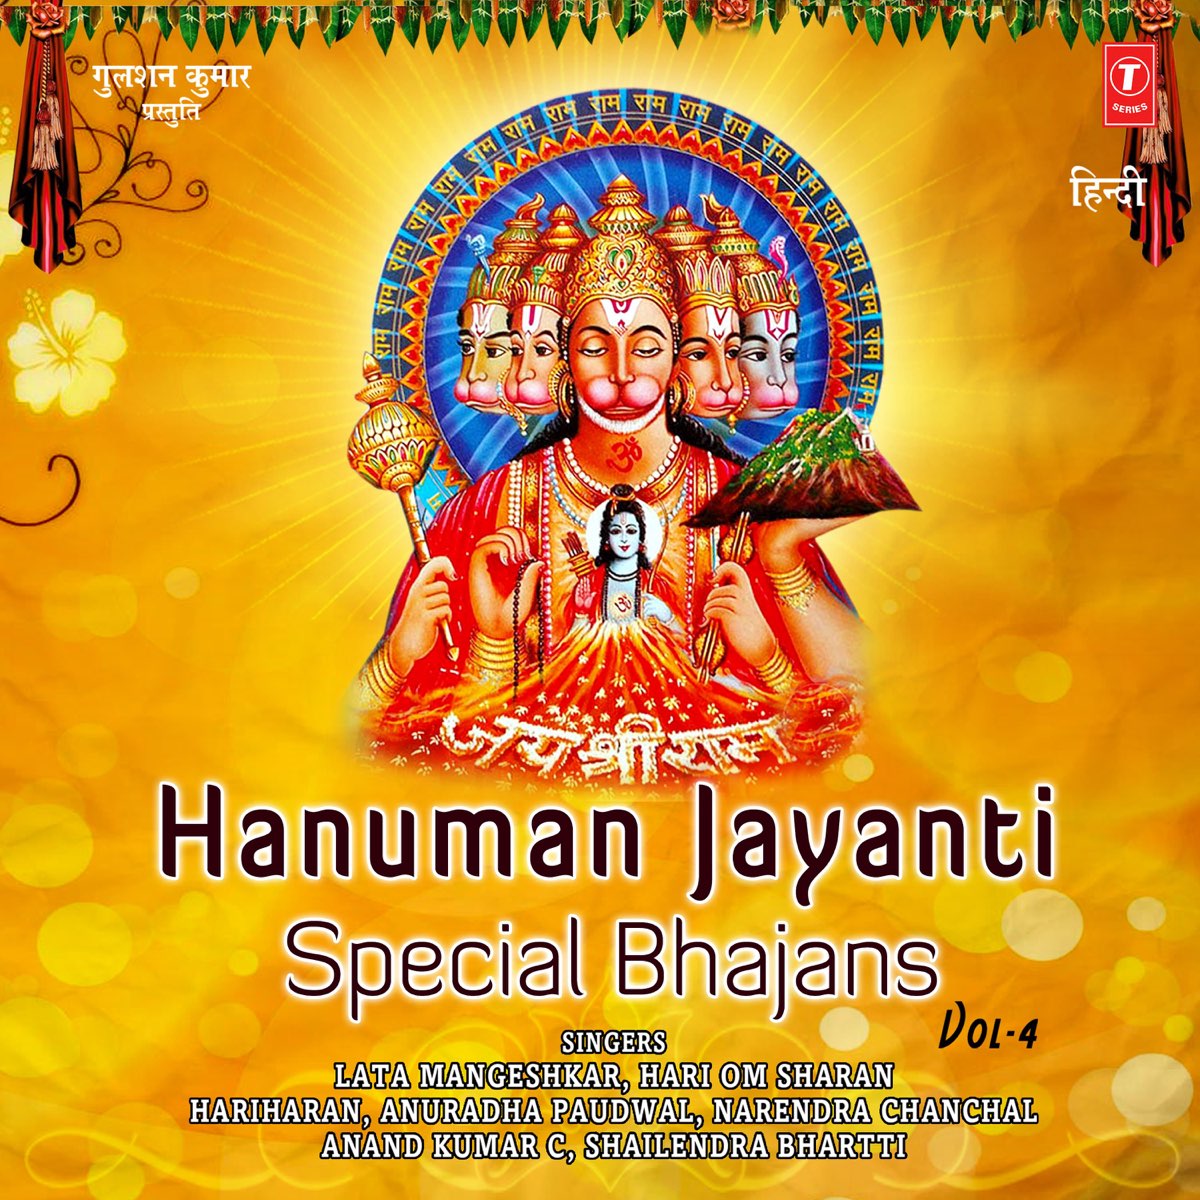 ‎hanuman Jayanti Special Bhajans Vol 4 By Various Artists On Apple Music 